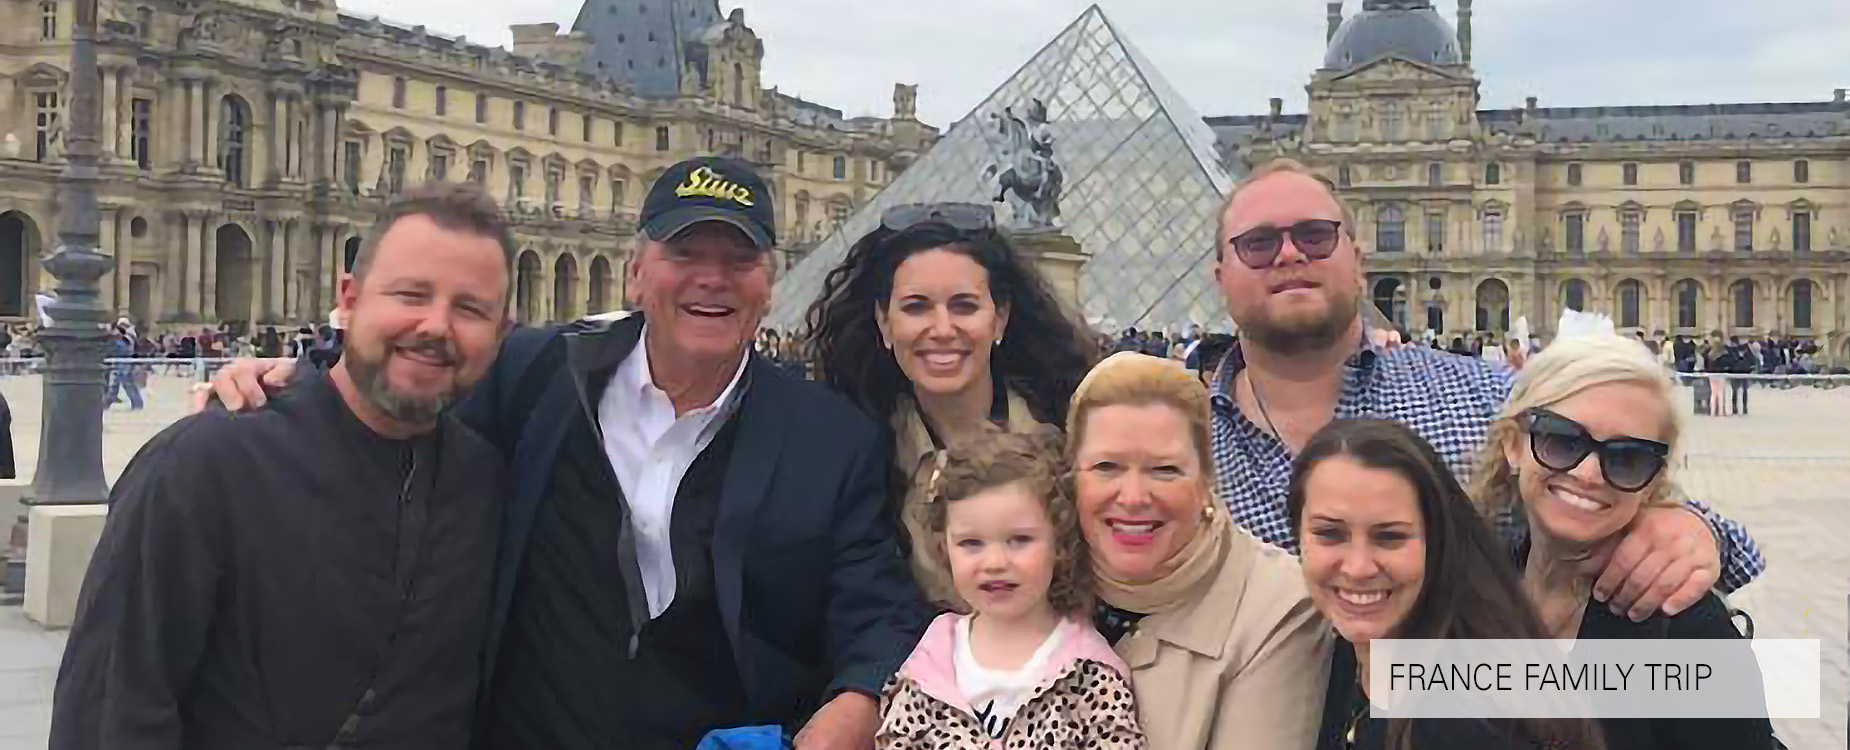 France Family Trip